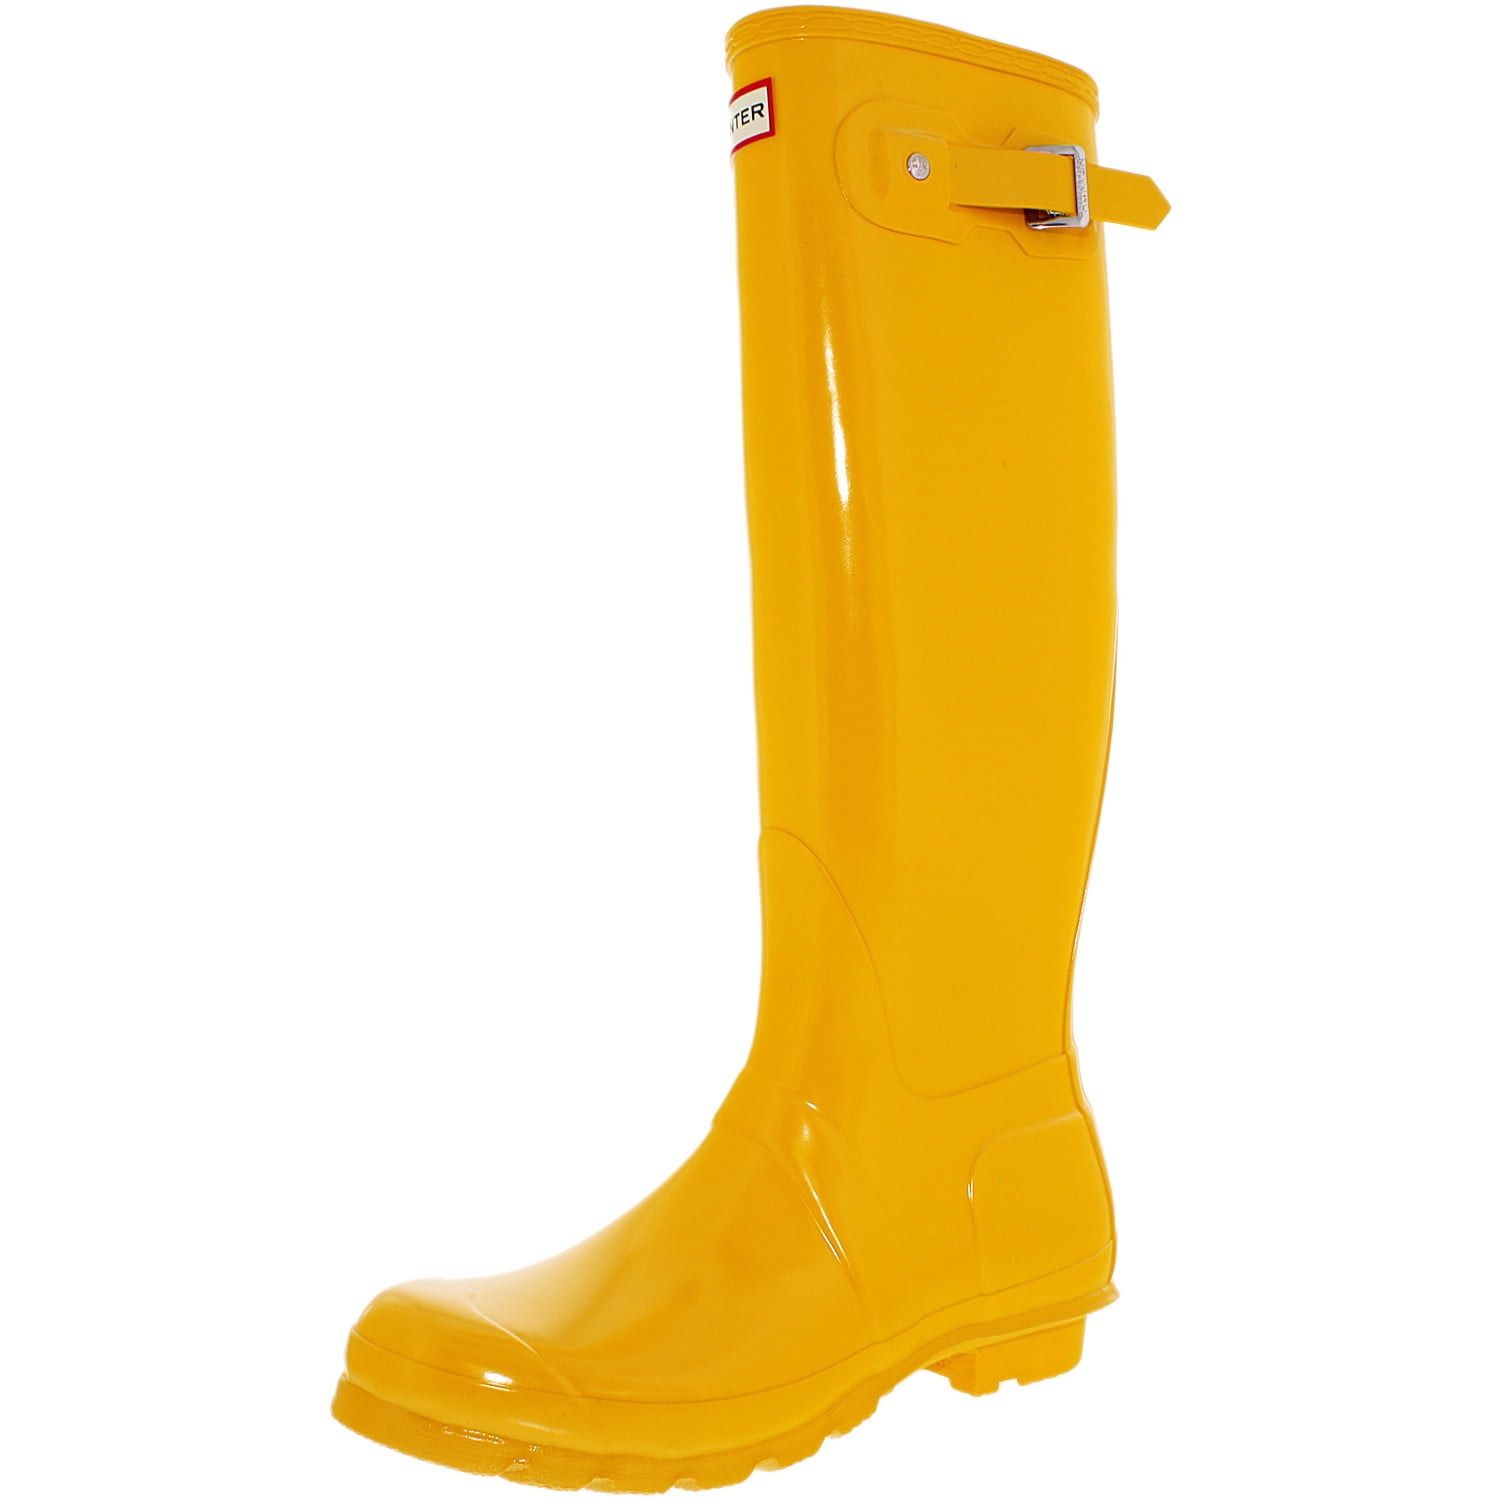 walmart yellow rain boots